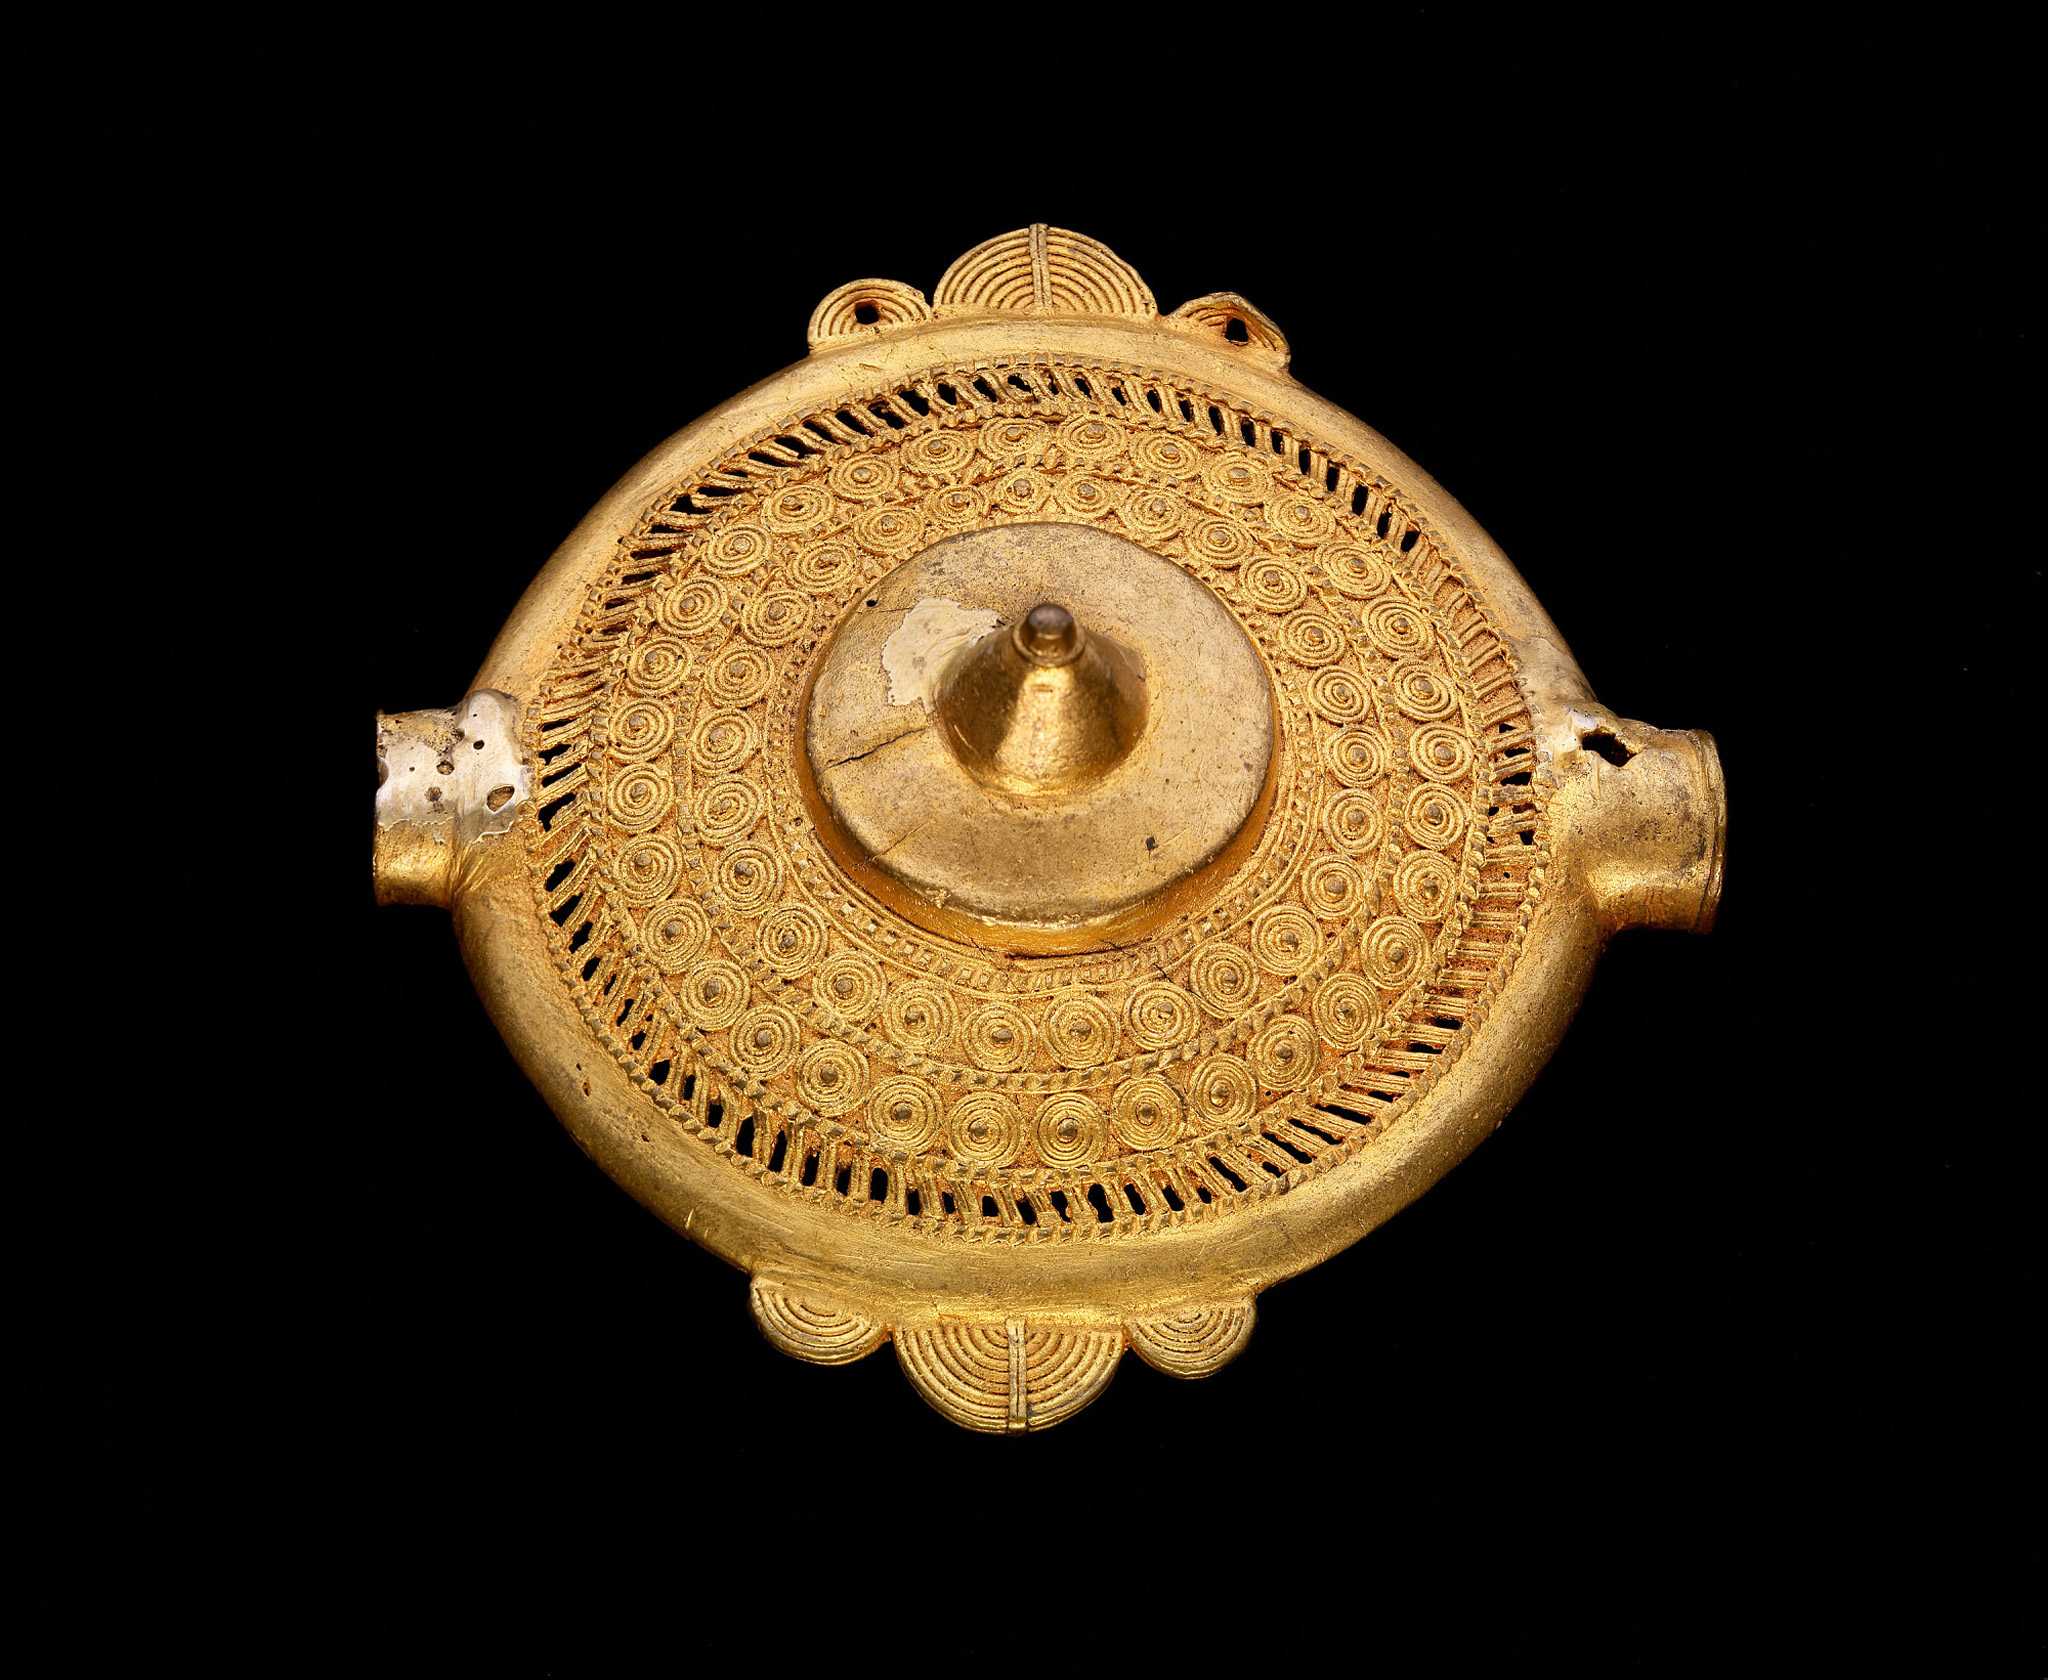 Photograph of a gold pectoral disc